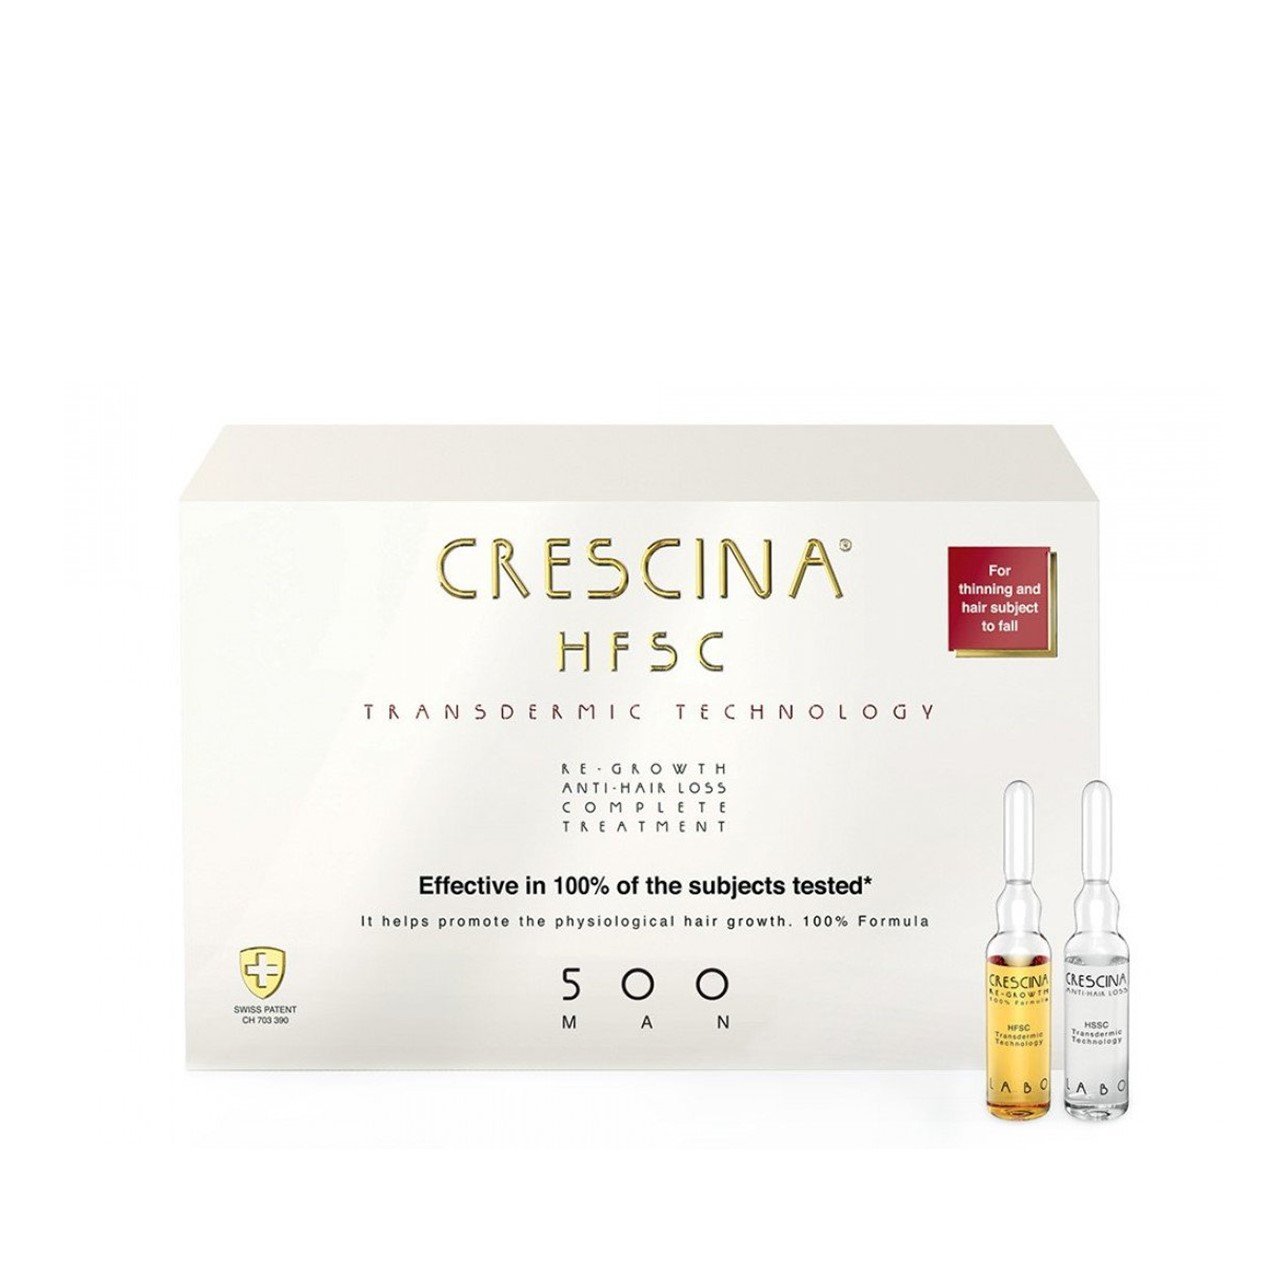 Crescina HFSC Transdermic Treatment 500 Man Ampoules 3.5ml x10+10 (10+10x0.12fl oz)